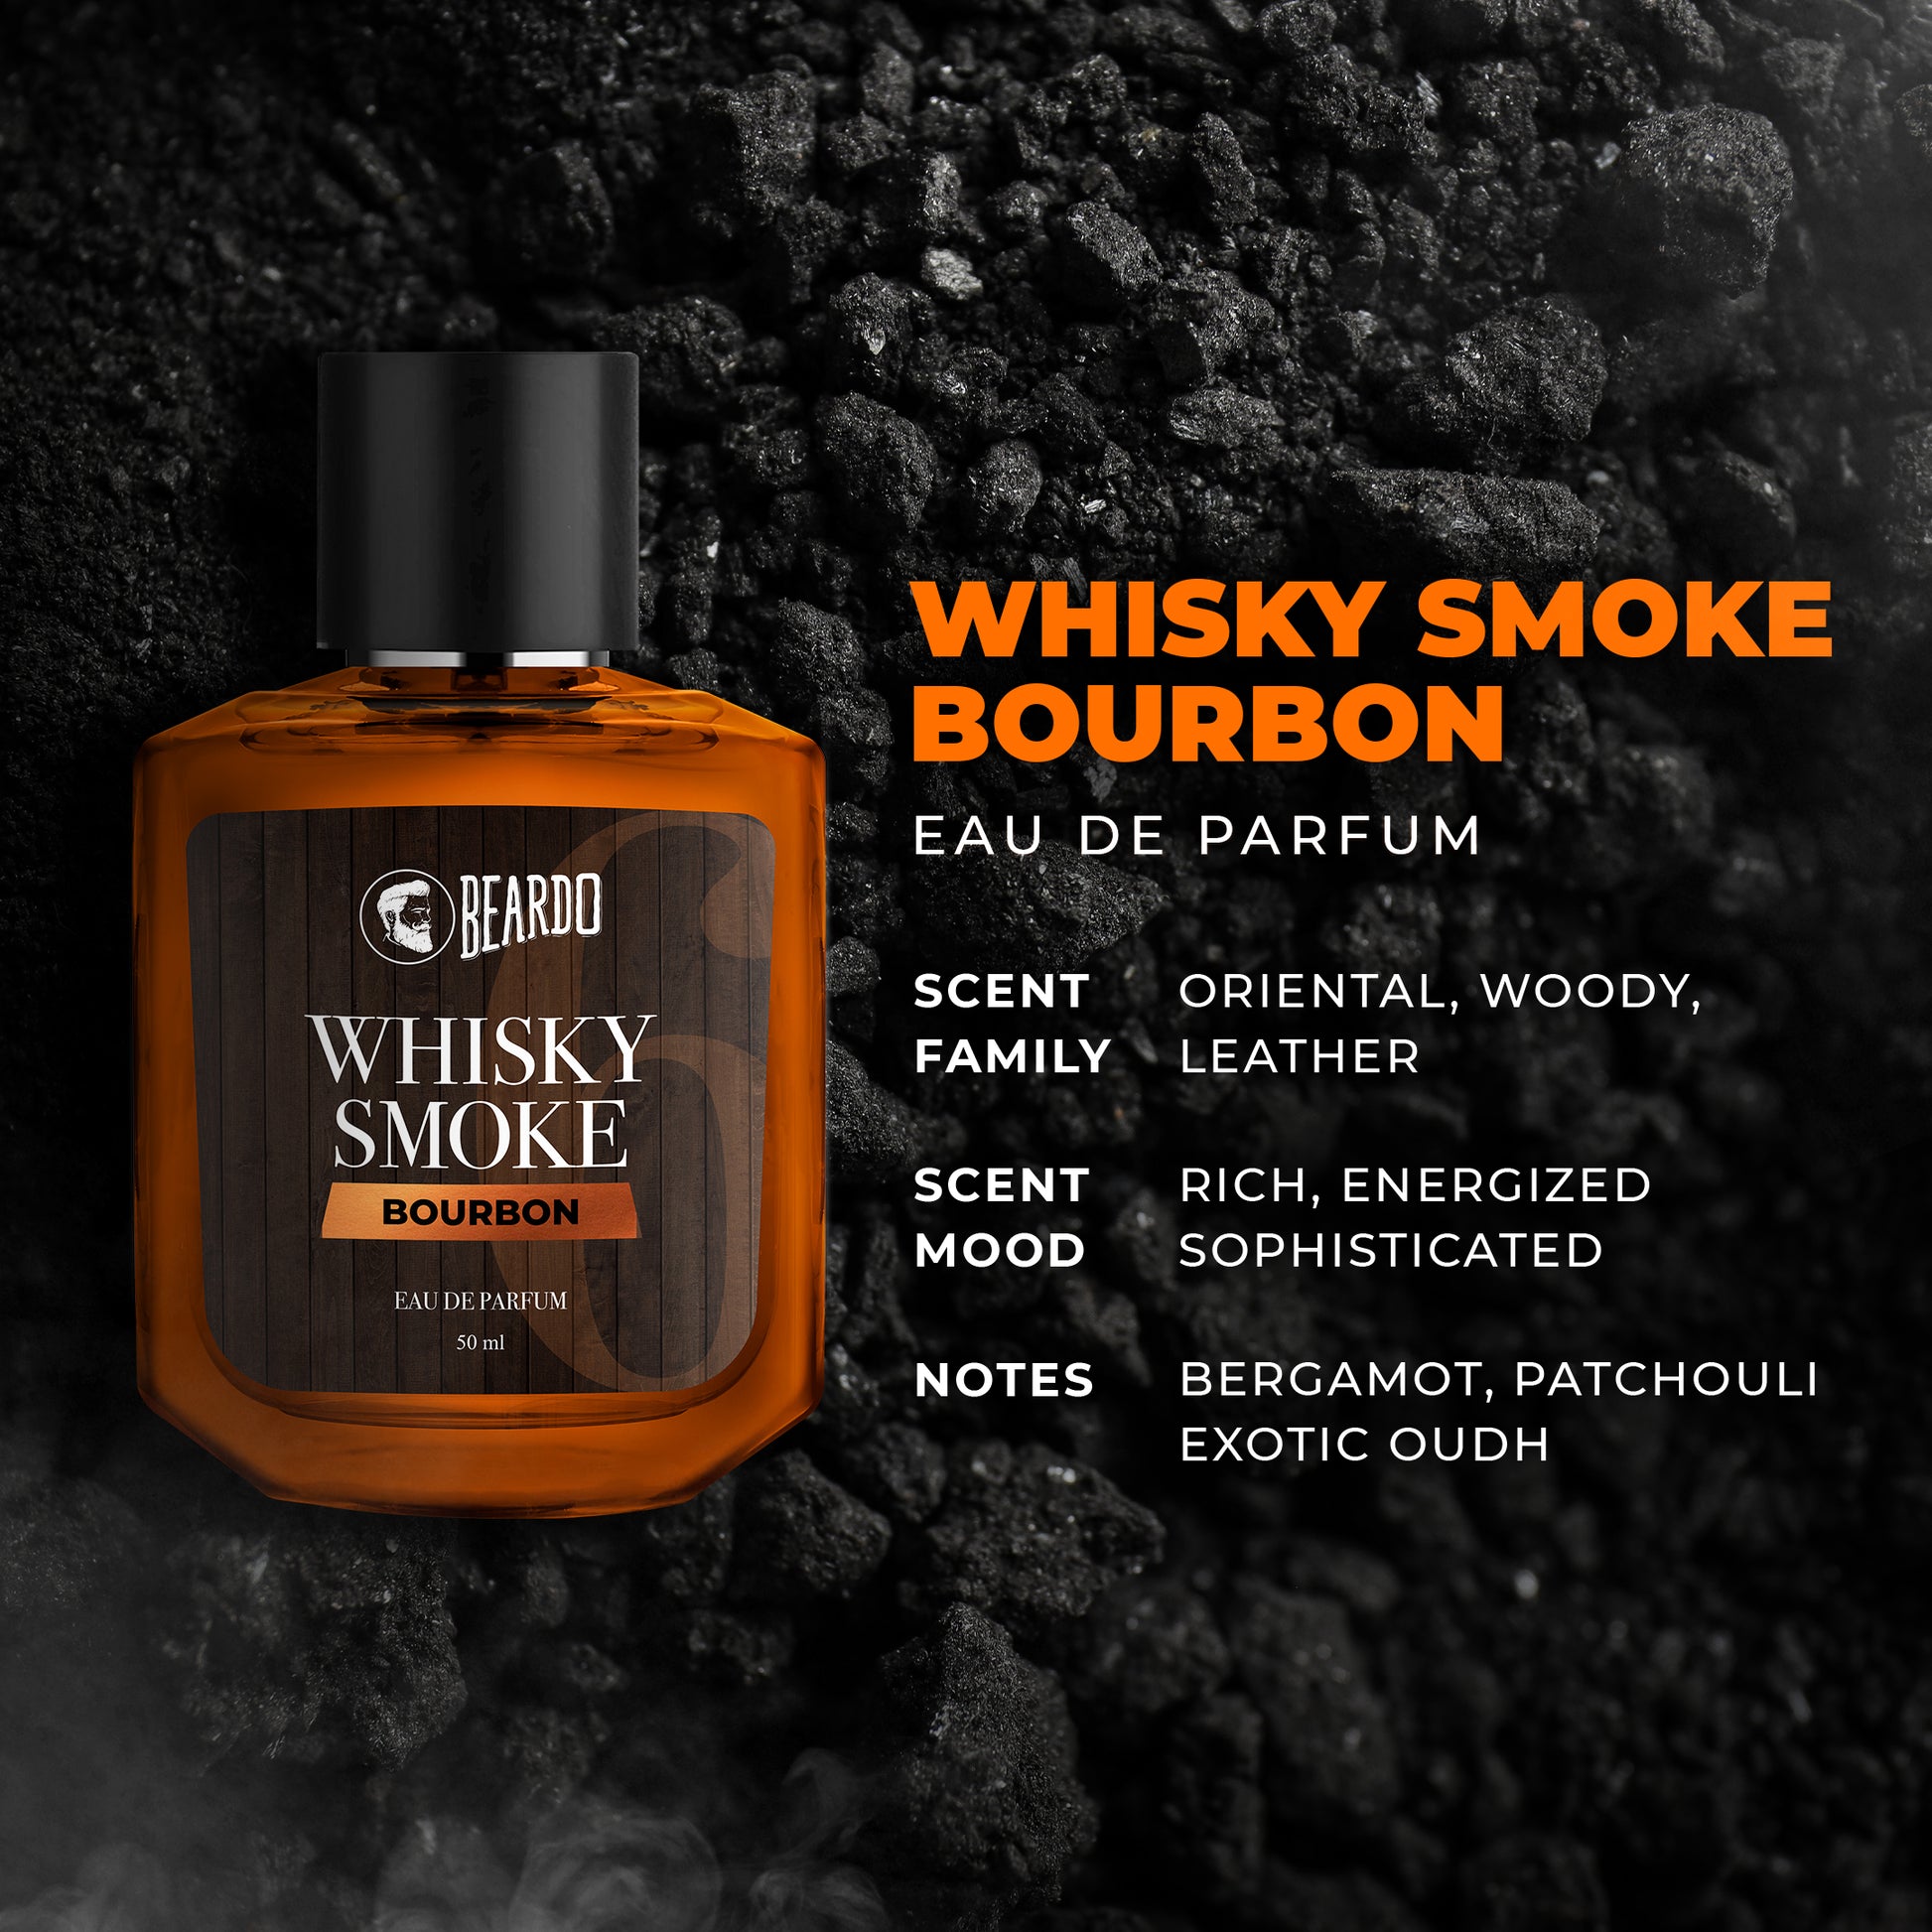 Beardo Whisky Smoke Bourbon Perfume EDP